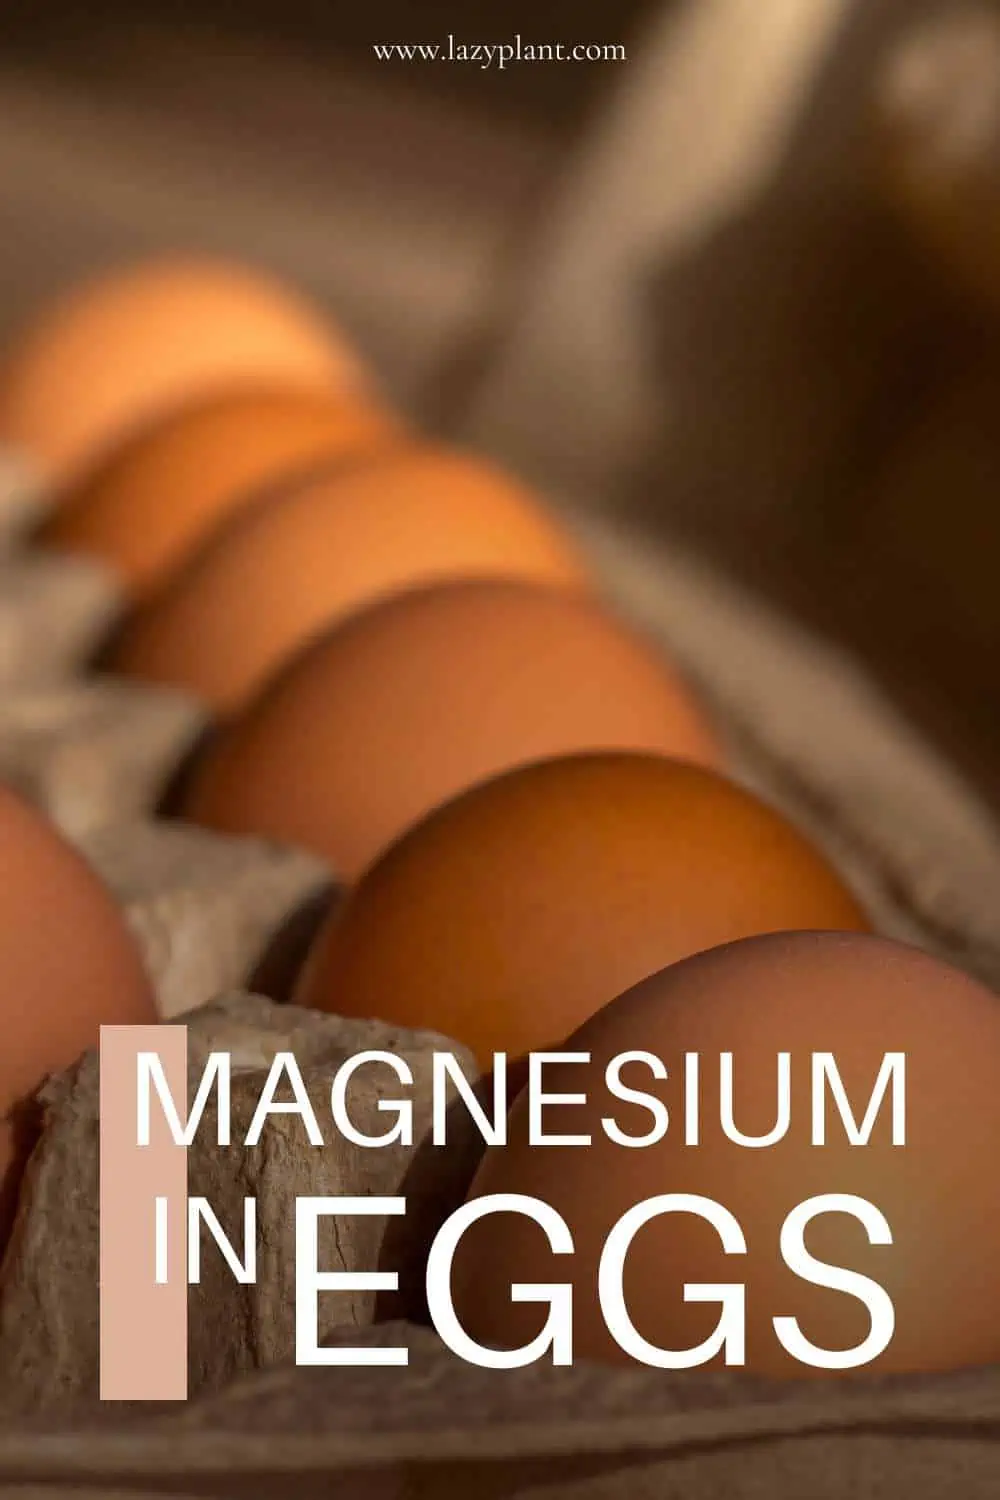 Are eggs rich in magnesium?